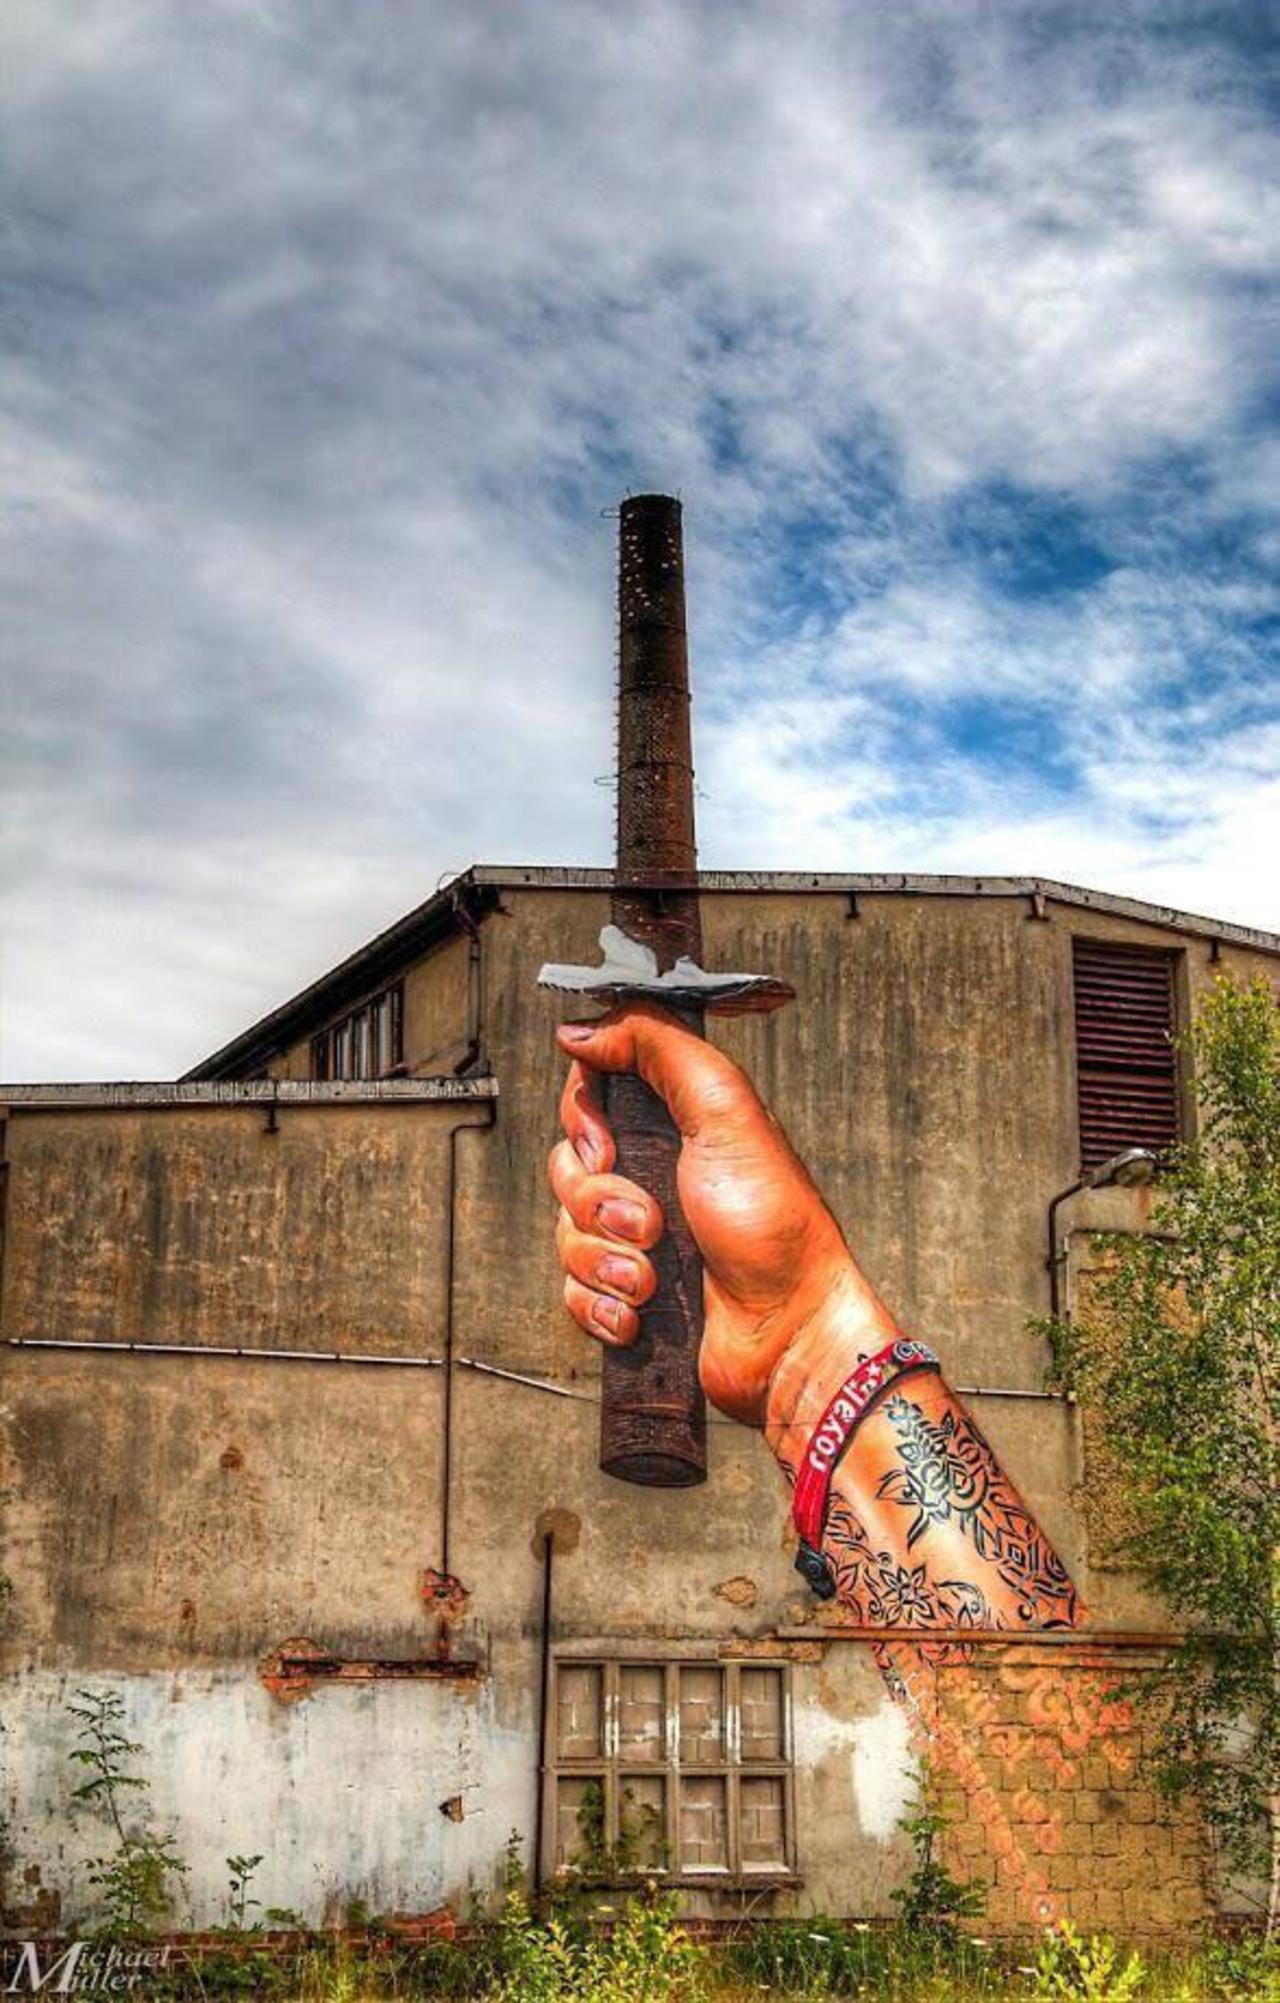 #switch a factory chimney into #streetart #bedifferent #graffiti #arte #art http://t.co/F9lT47mq0h